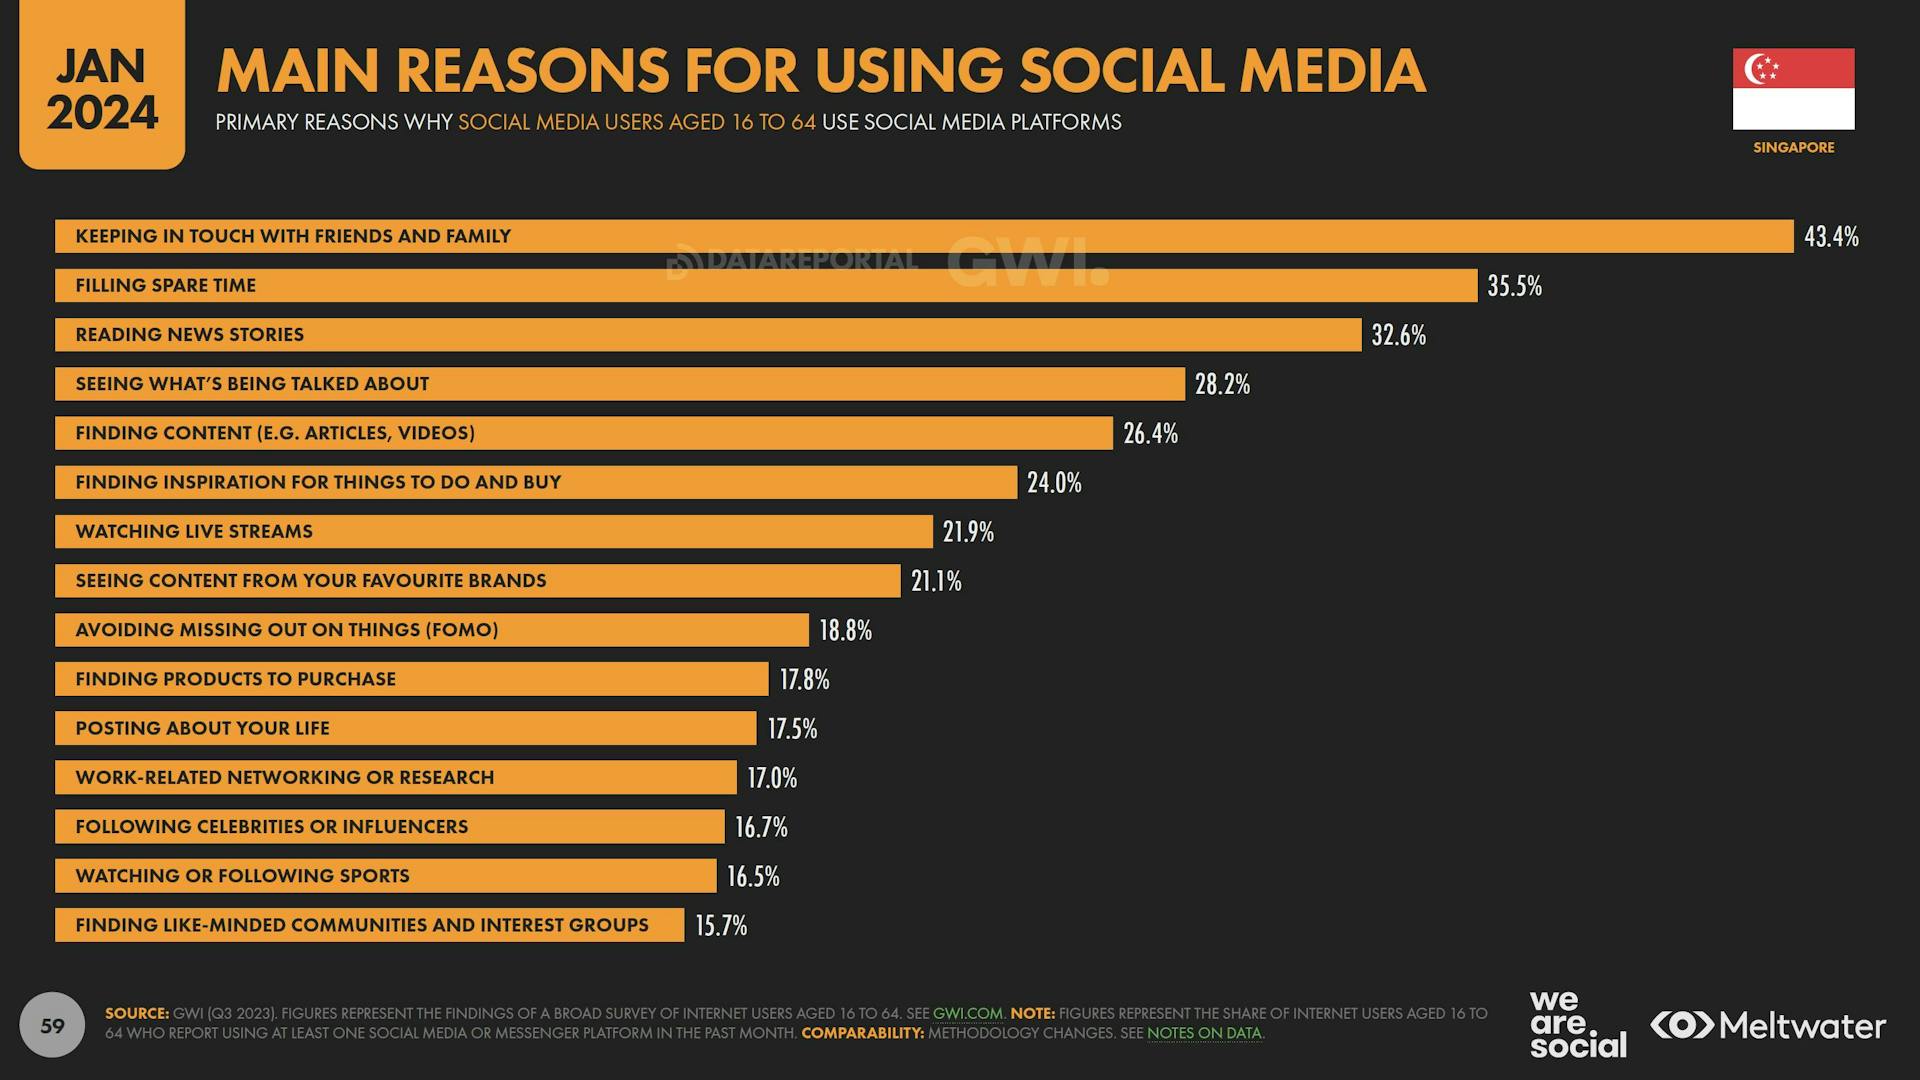 Main reasons for using social media based on Global Digital Report 2024 for Singapore